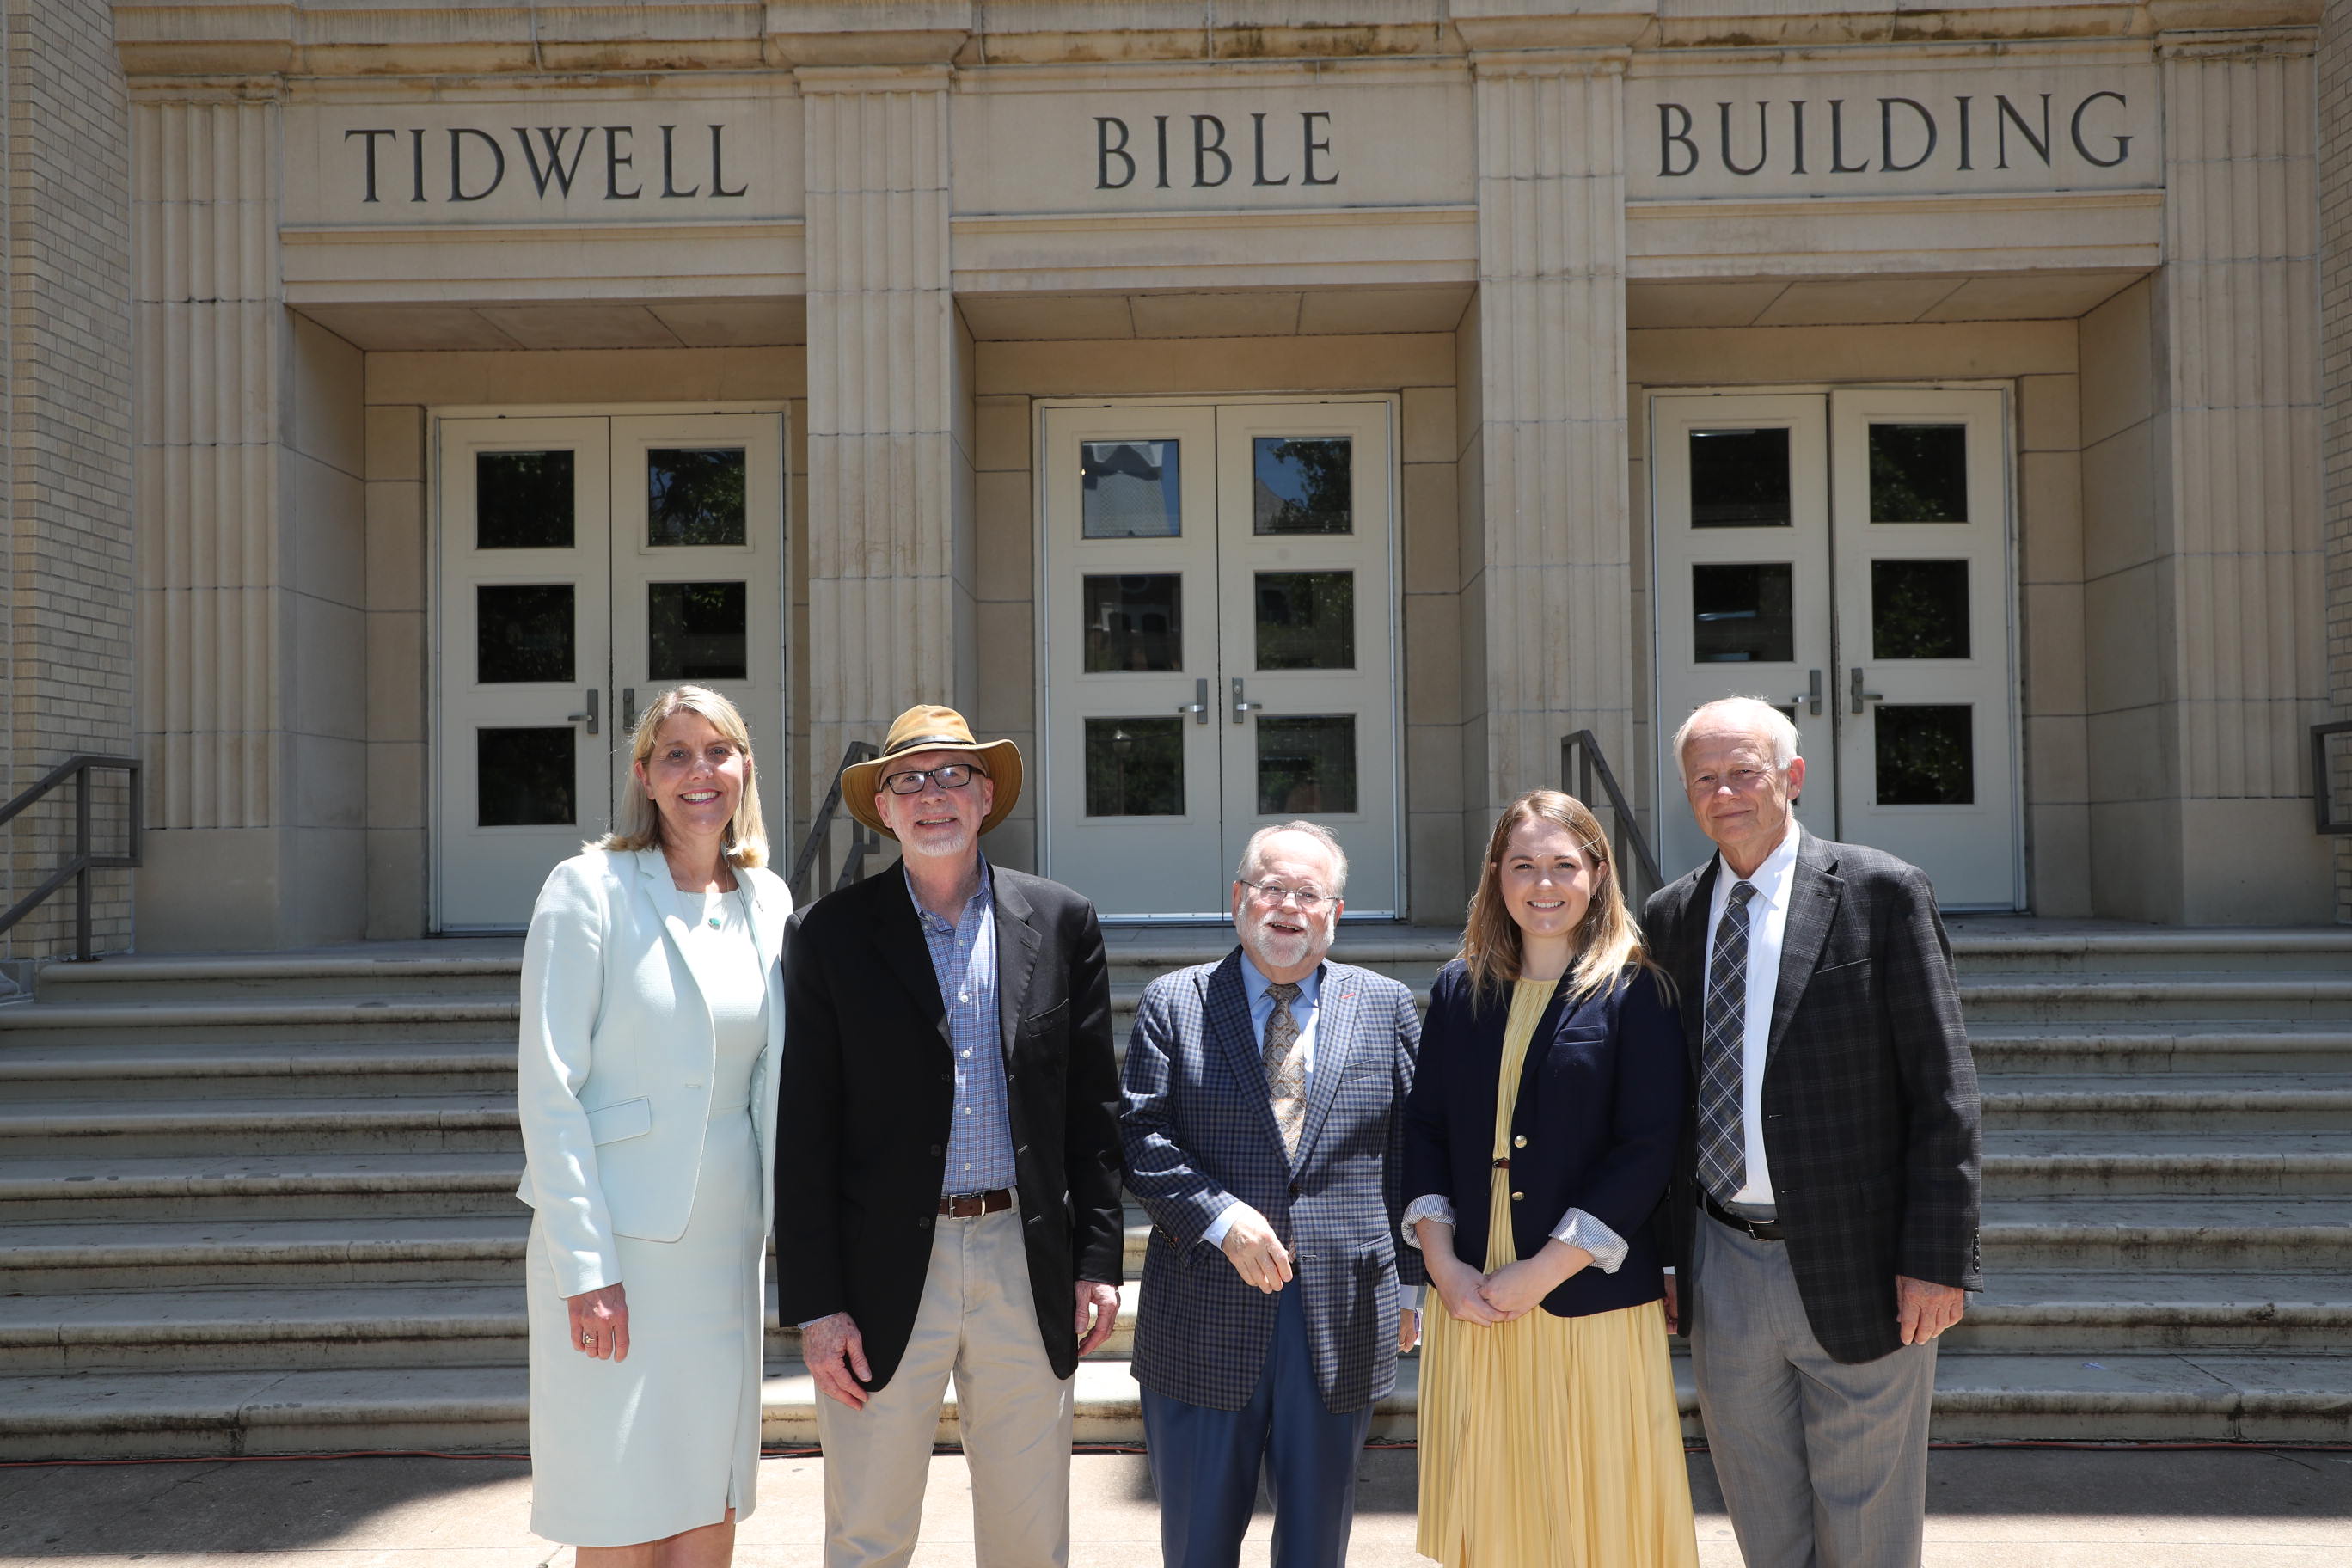 Tidwell Bible Building group